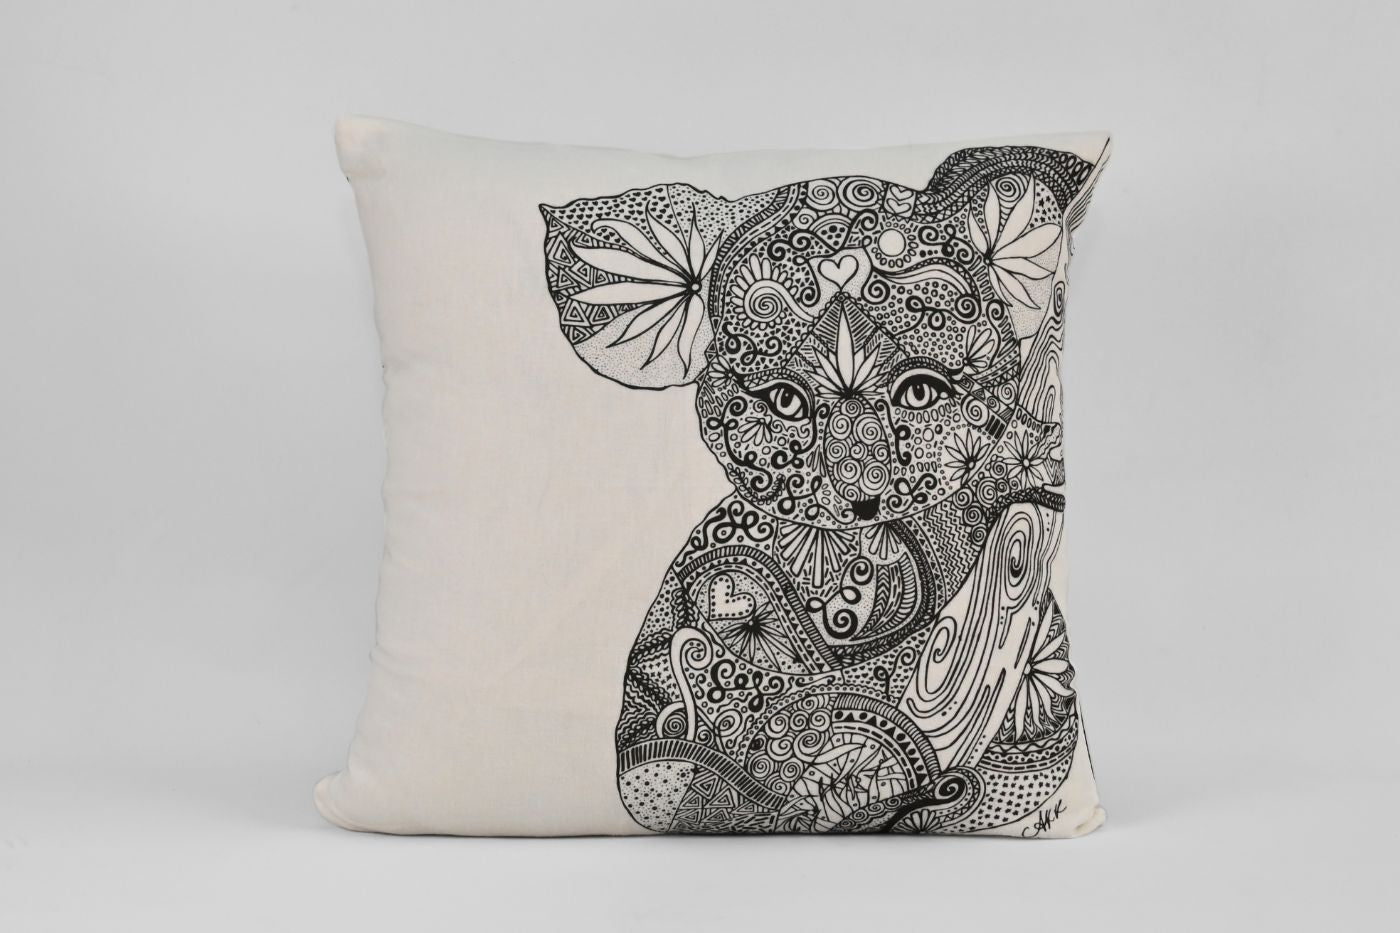 Kimberly the Koala Natural Linen Cushion - Black and White